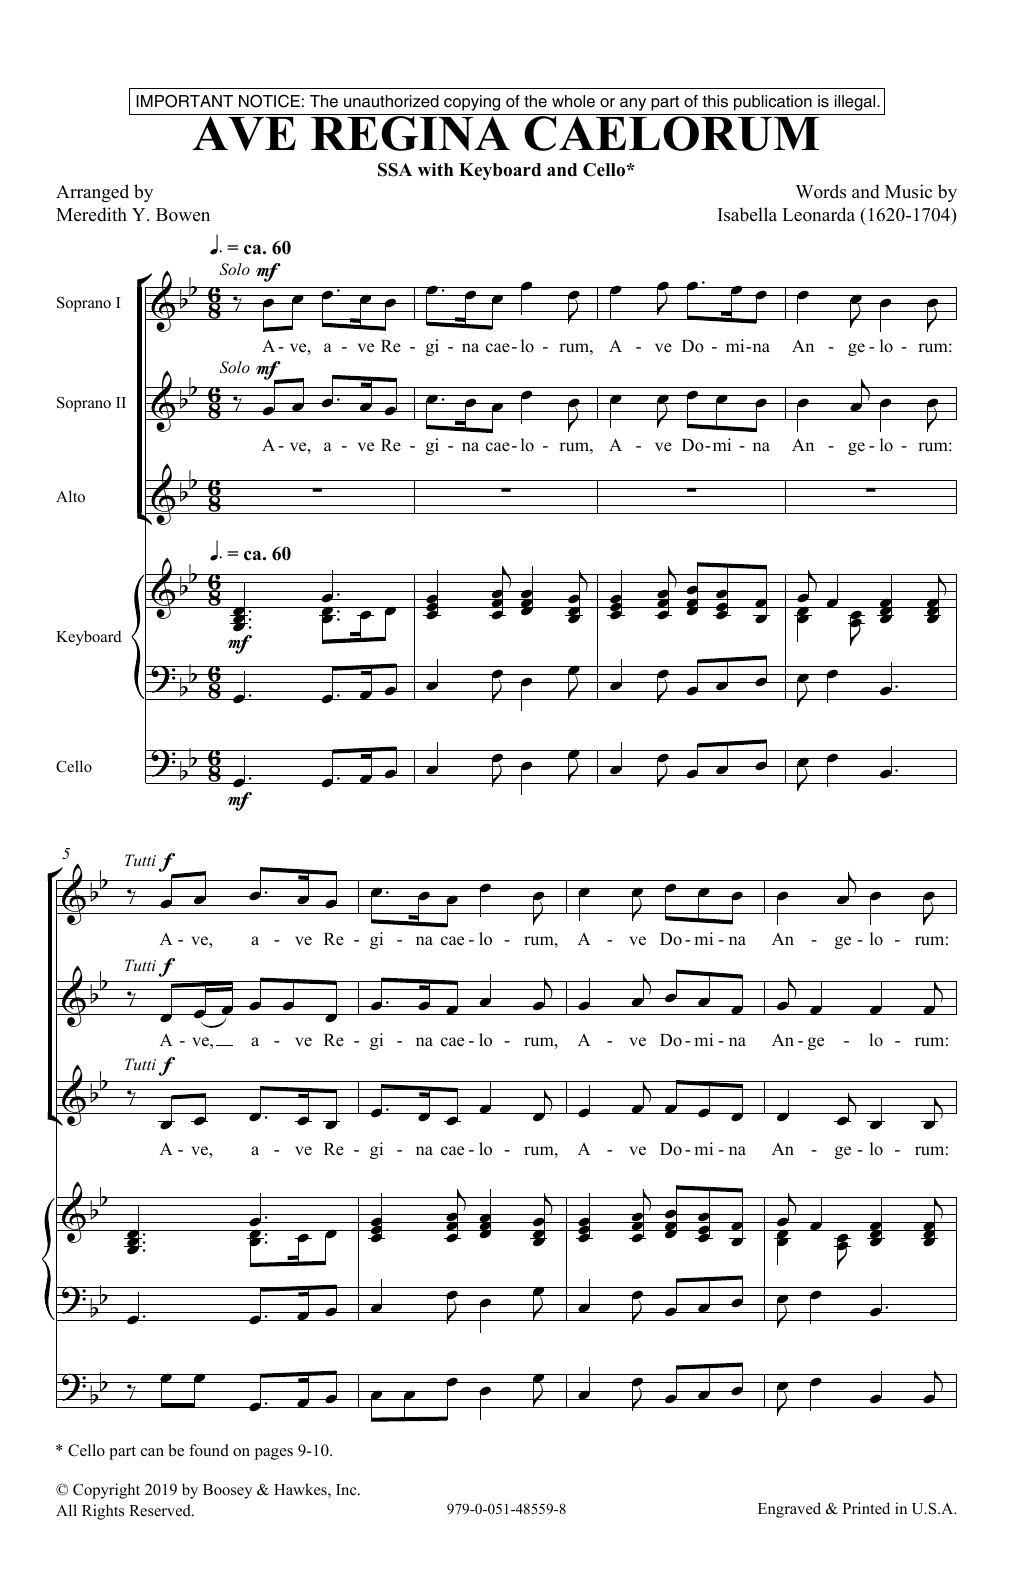 Isabella Leonarda Ave Regina Caelorum (arr. Meredith Y. Bowen) Sheet Music Notes & Chords for SSA Choir - Download or Print PDF